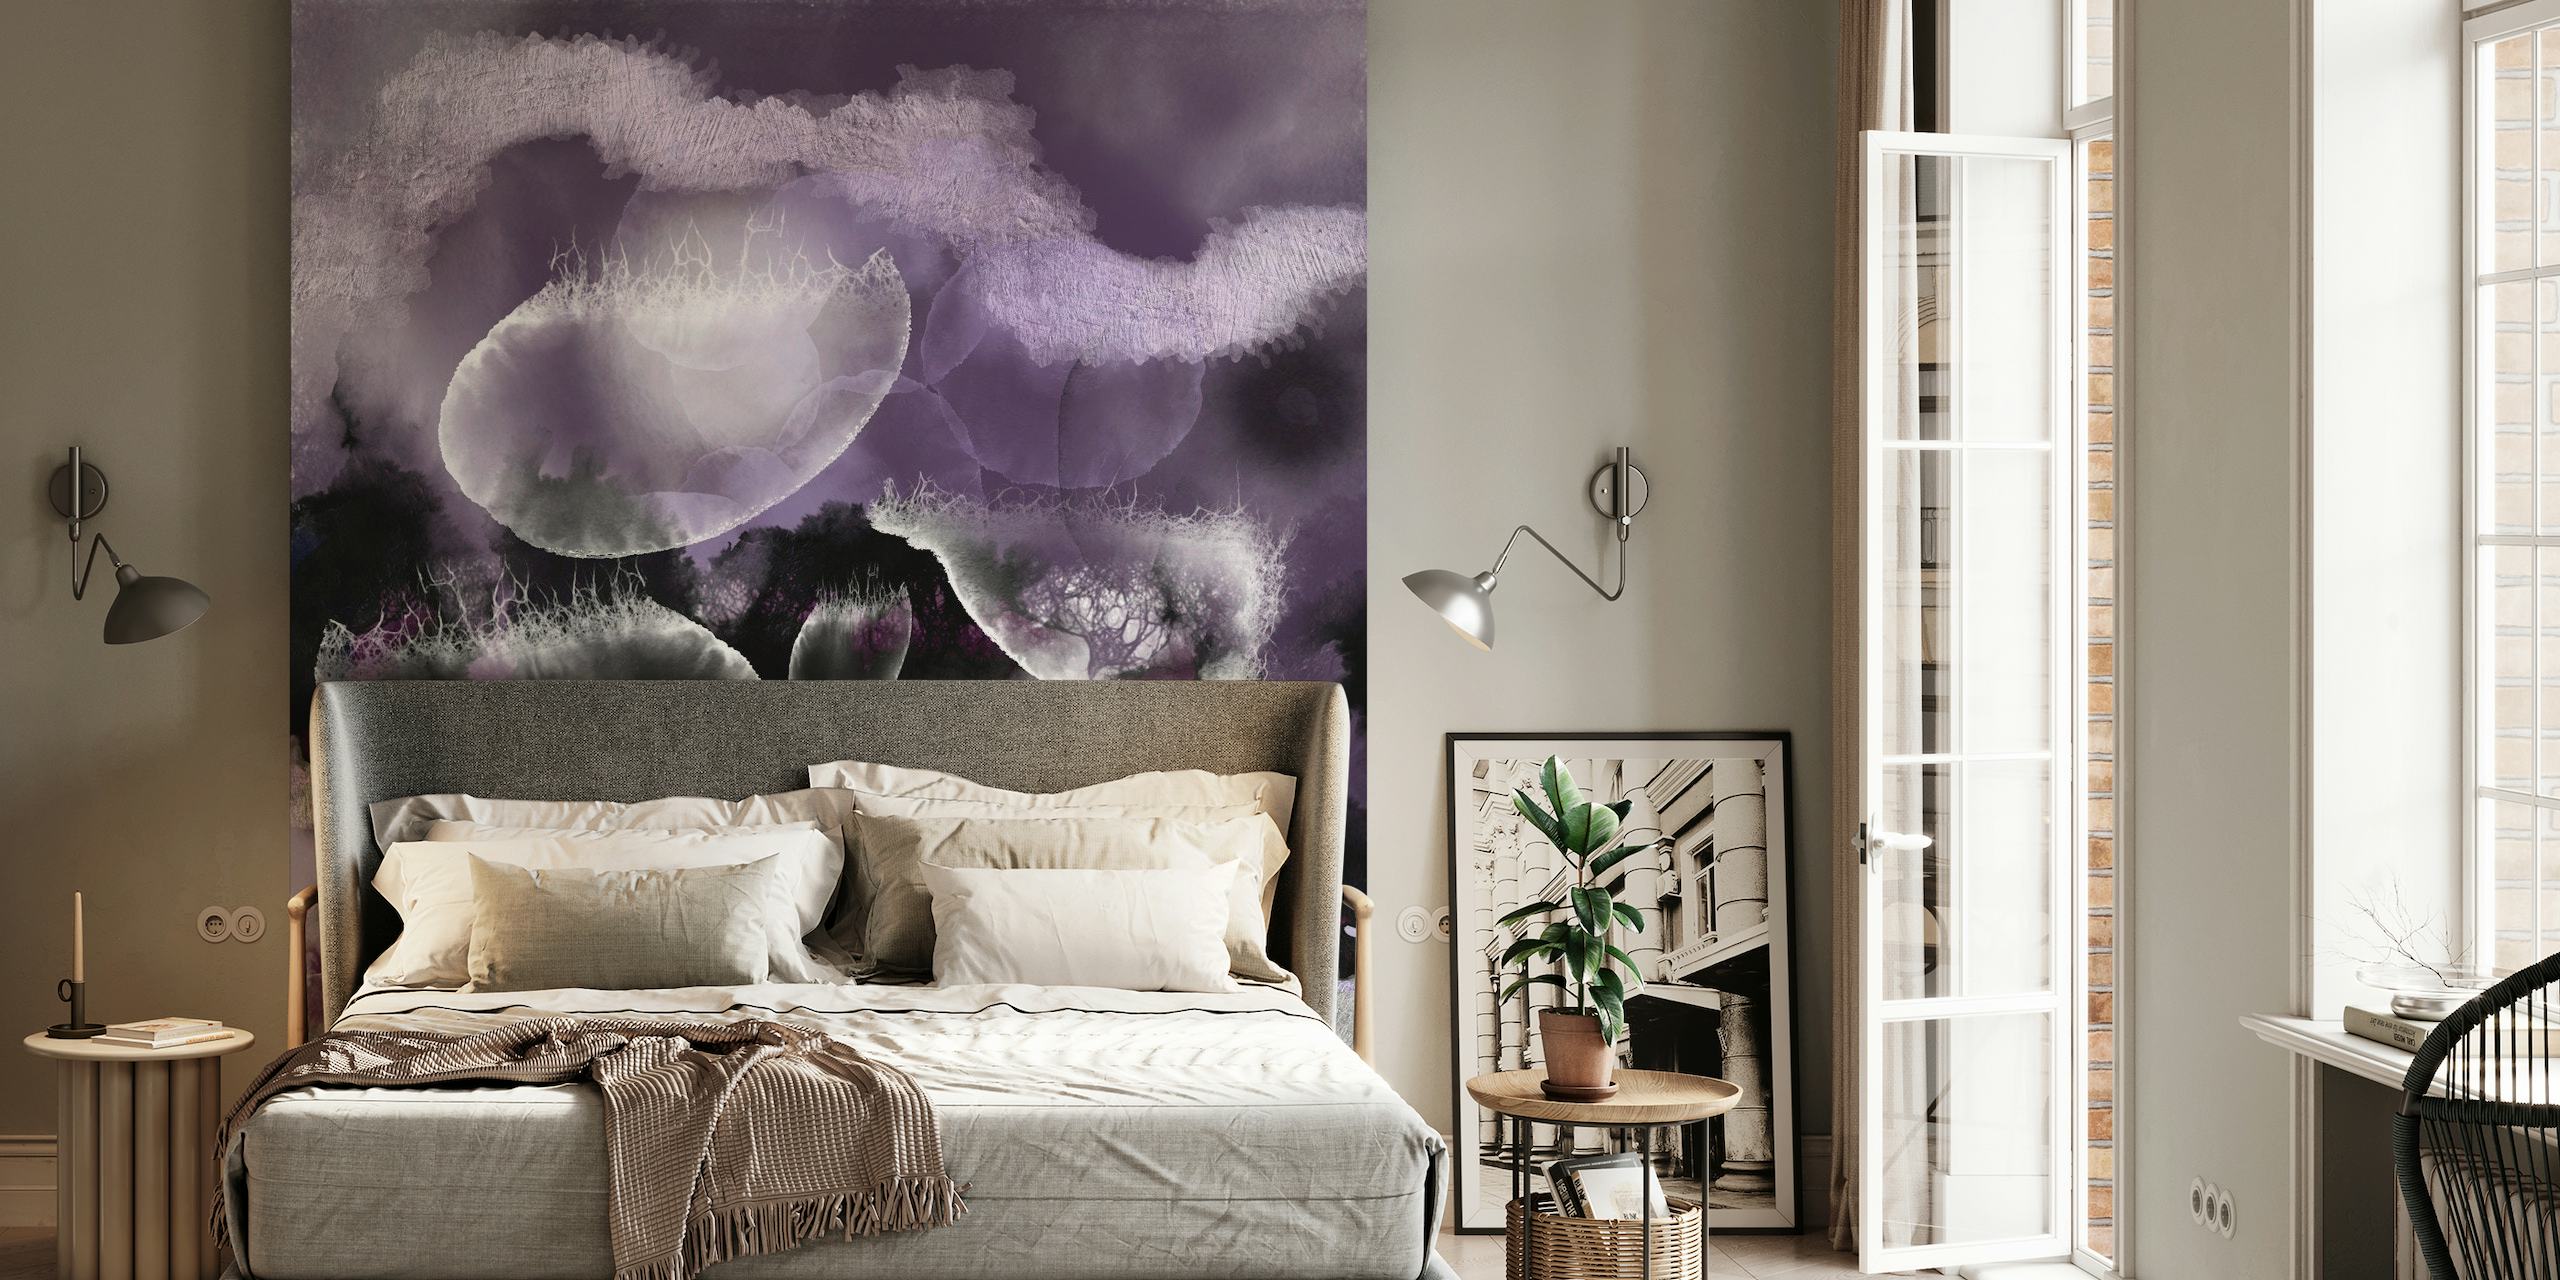 Abstrakt hav-inspireret vægmaleri i lilla toner med æteriske undervandslignende mønstre